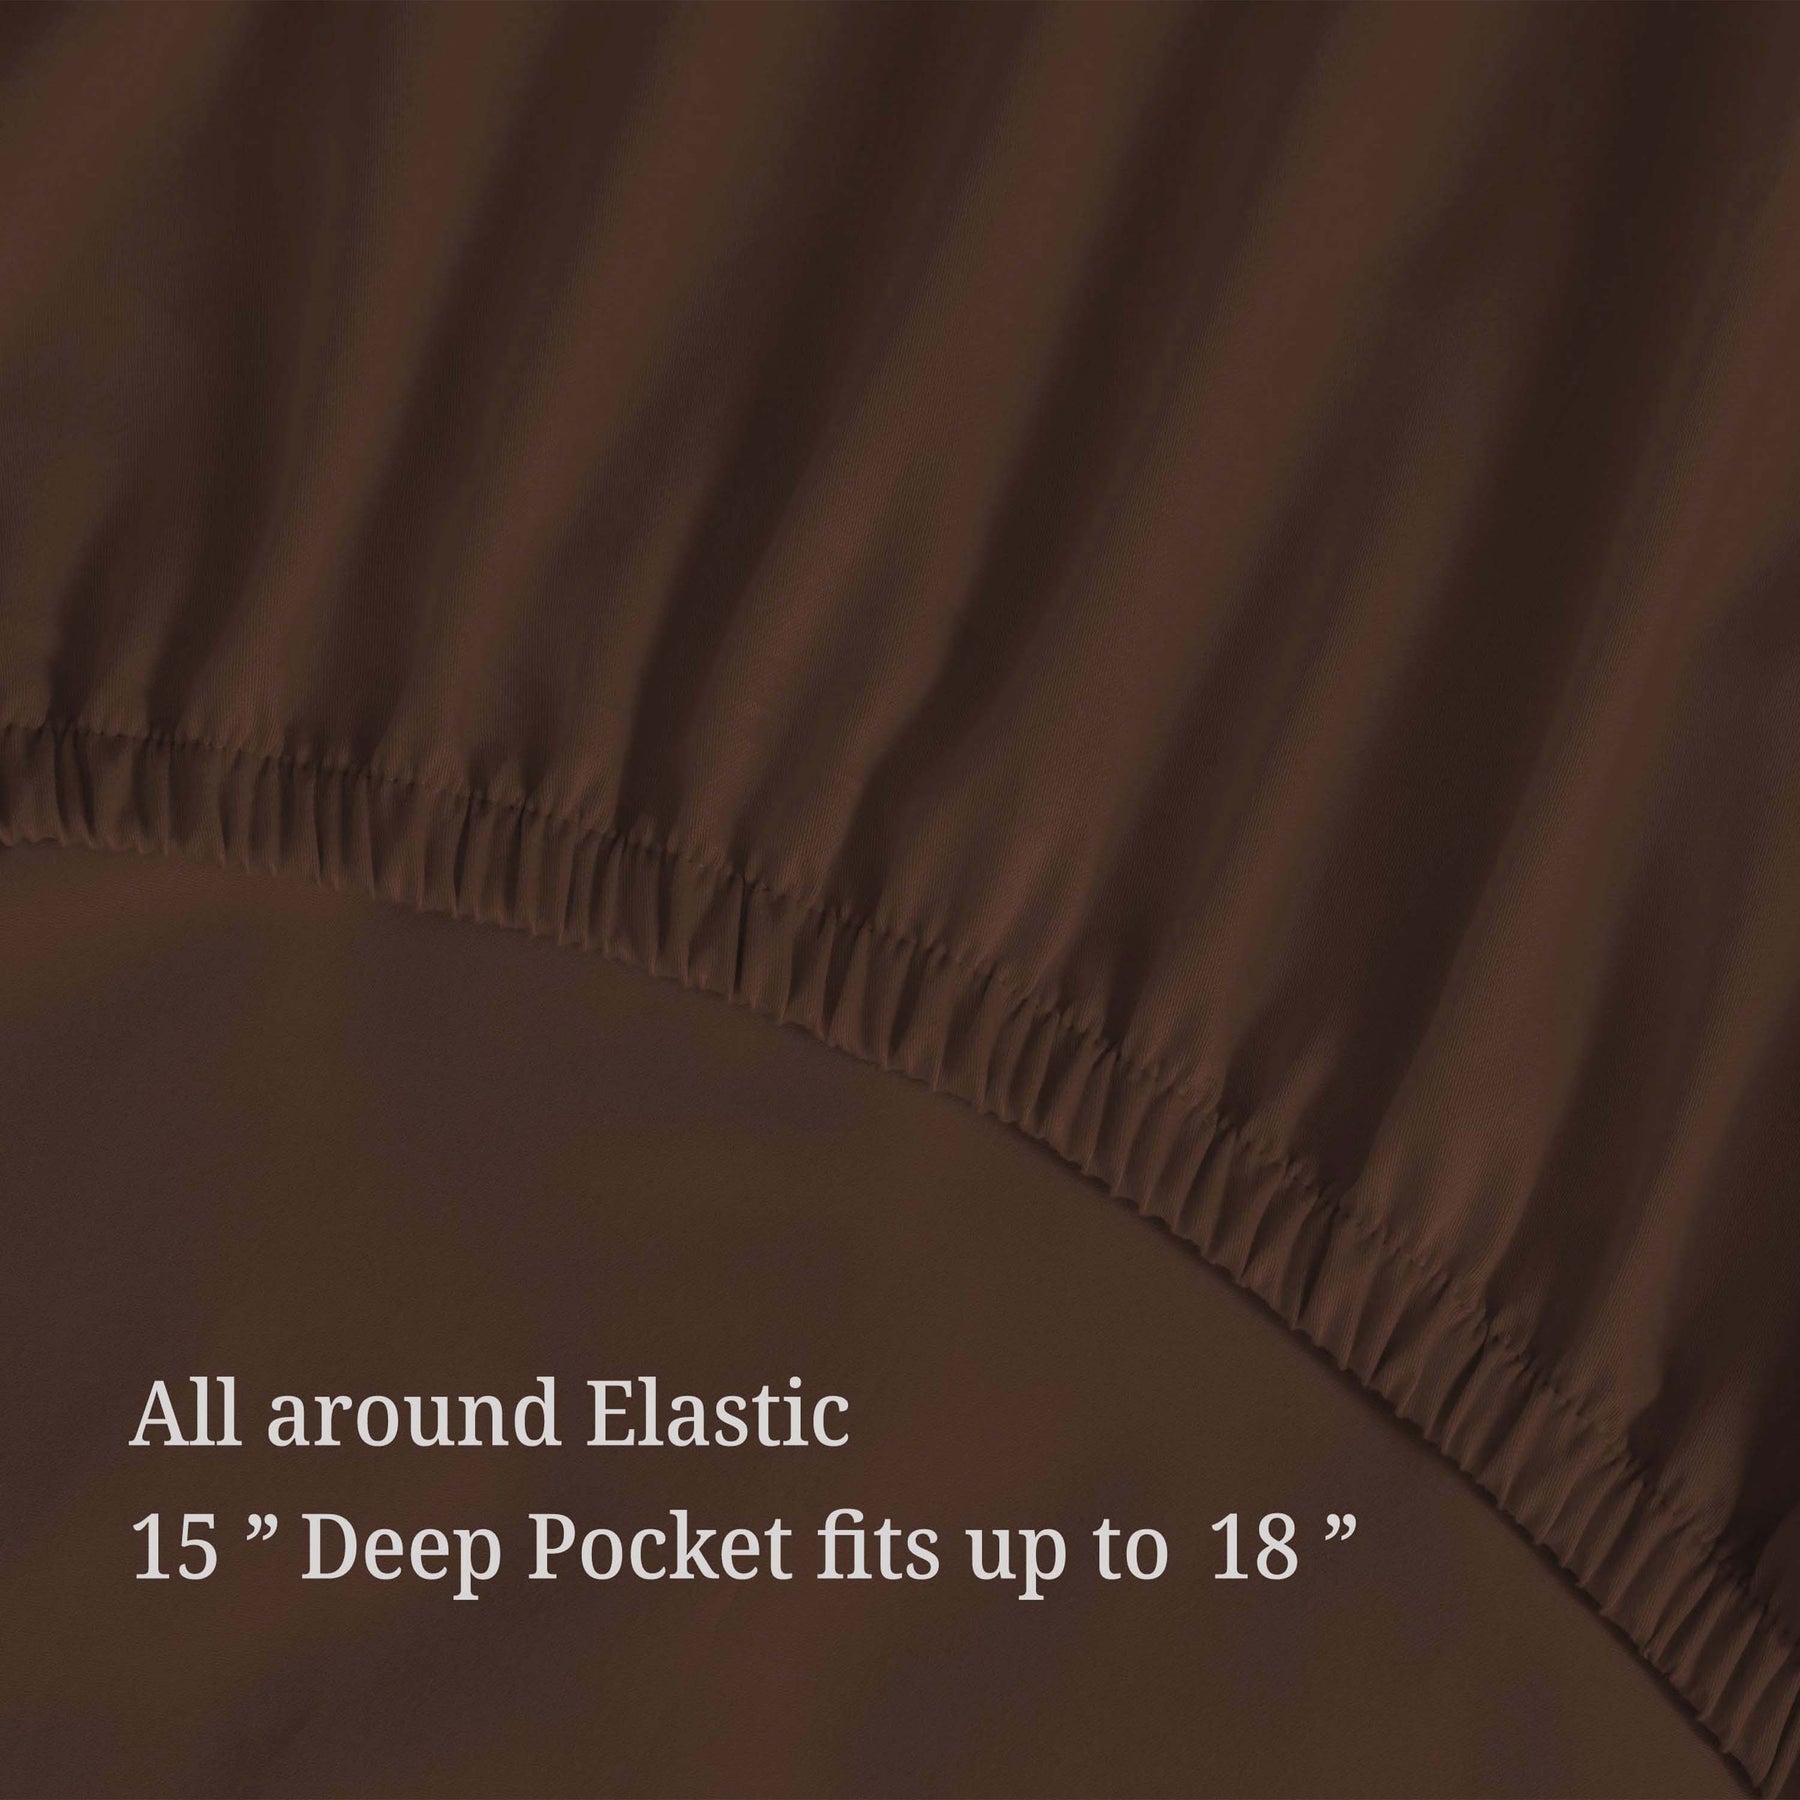 300 Thread Count Egyptian Cotton Solid Deep Pocket Sheet Set - Mocha